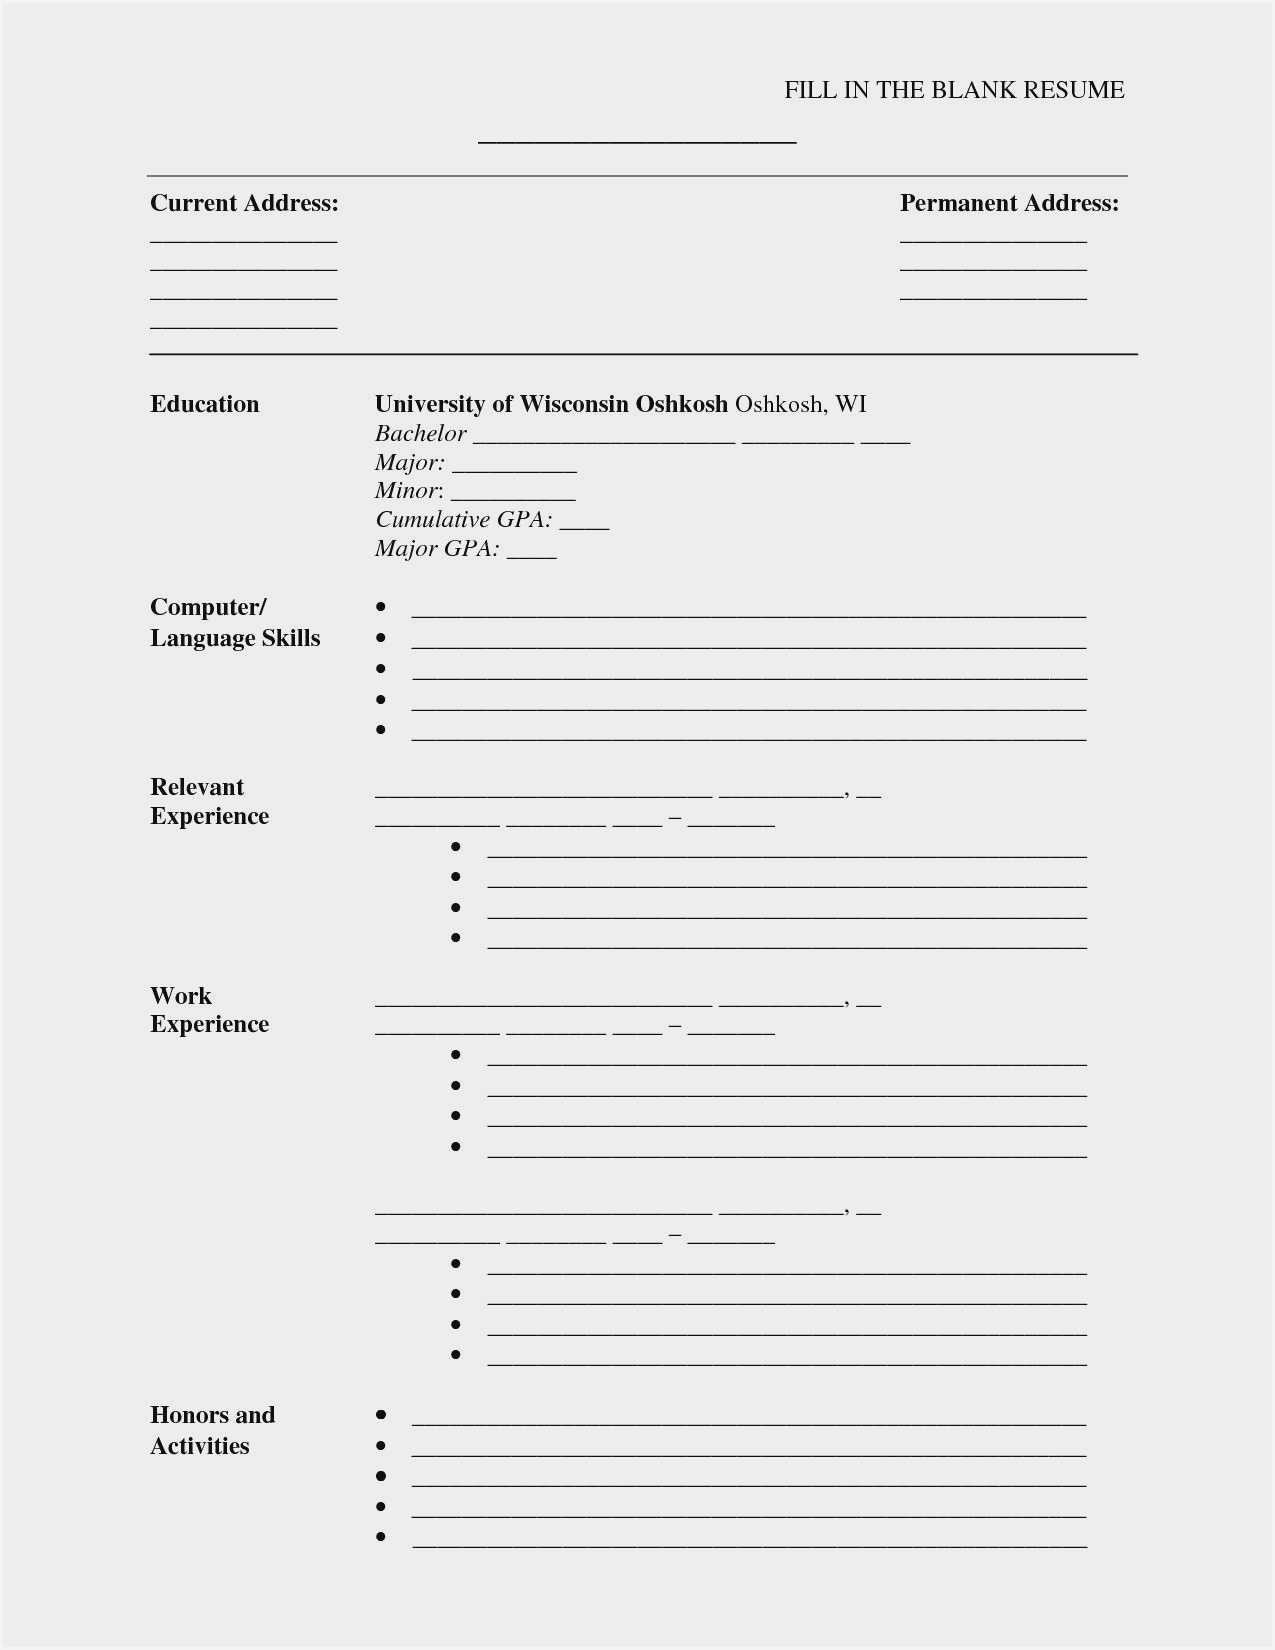 Blank Cv Format Word Download - Resume : Resume Sample #3945 Regarding Blank Resume Templates For Microsoft Word